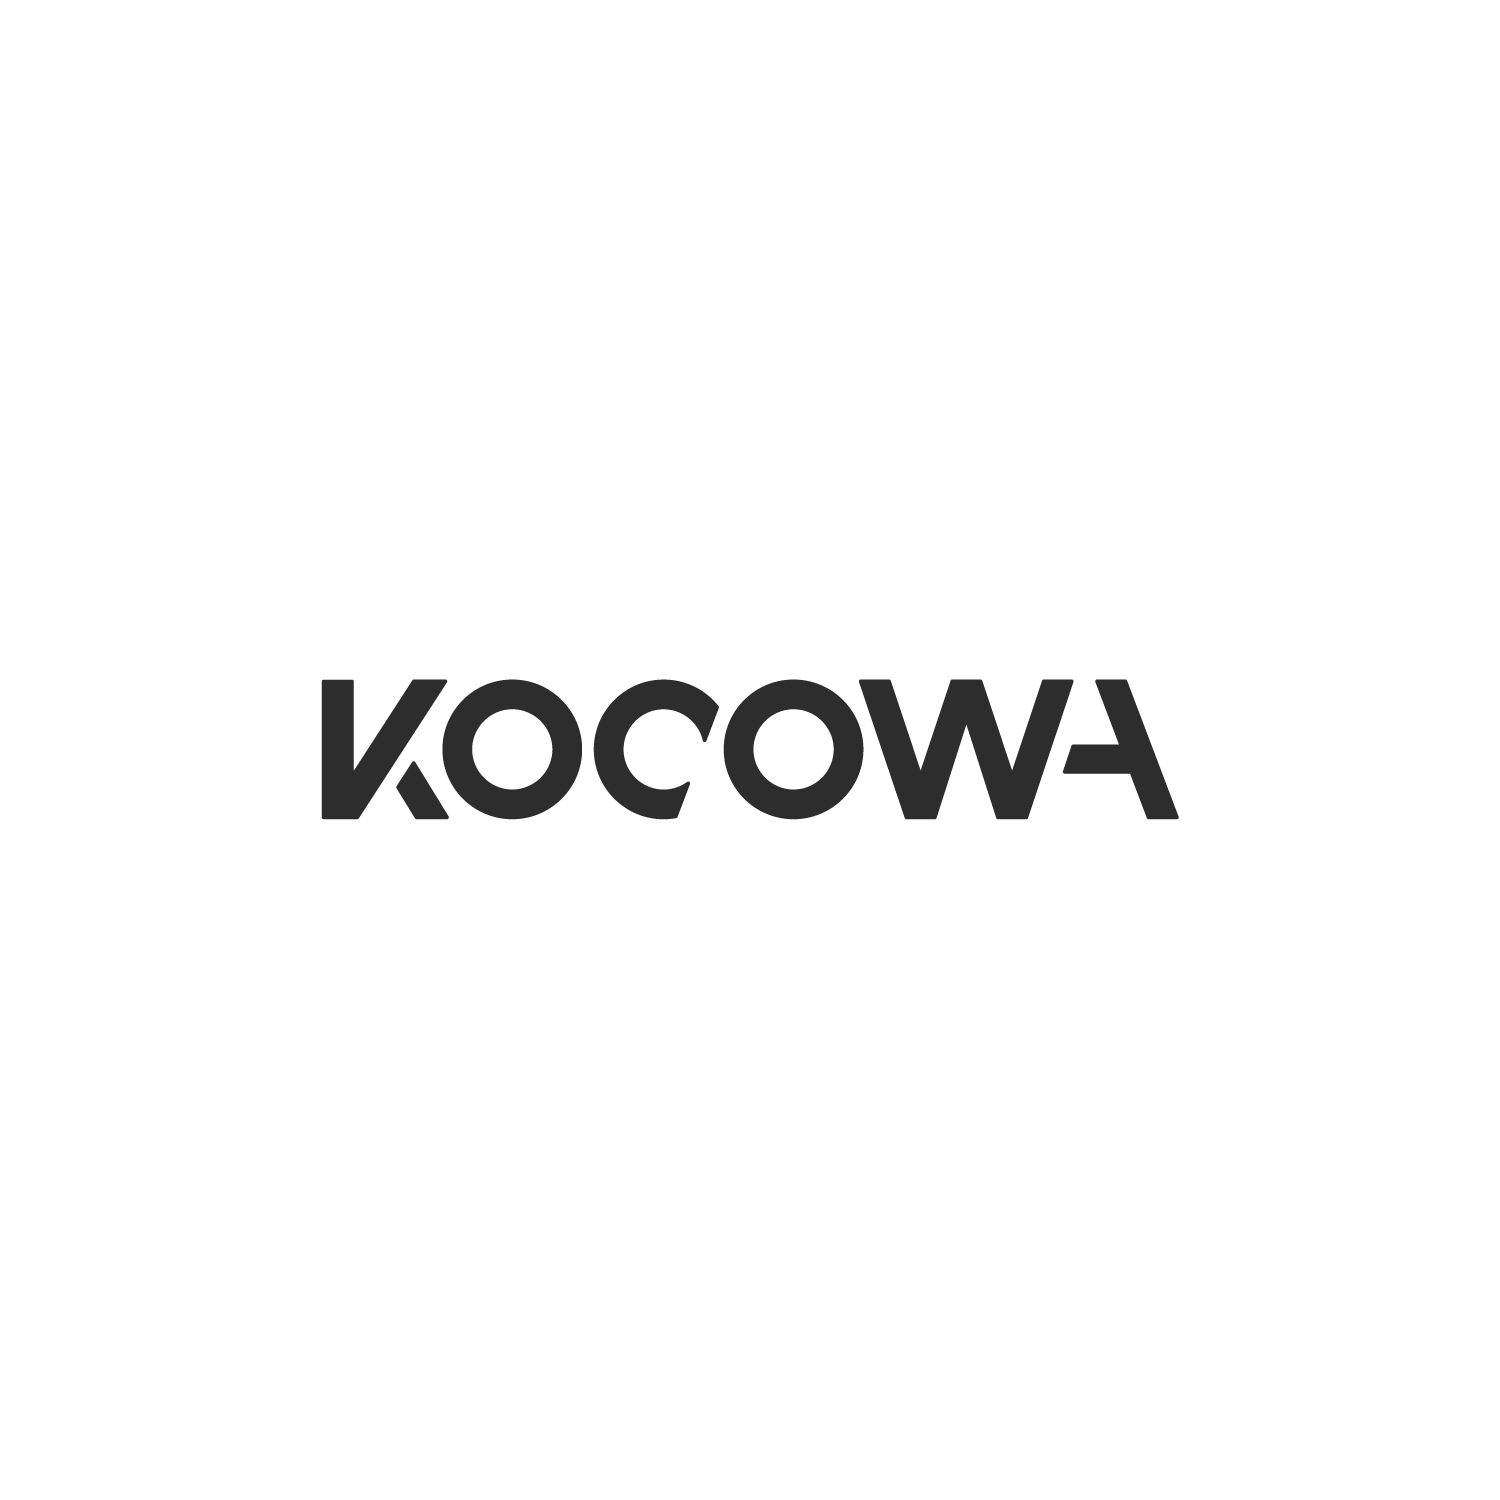 Kocowa Logo Transparent Image